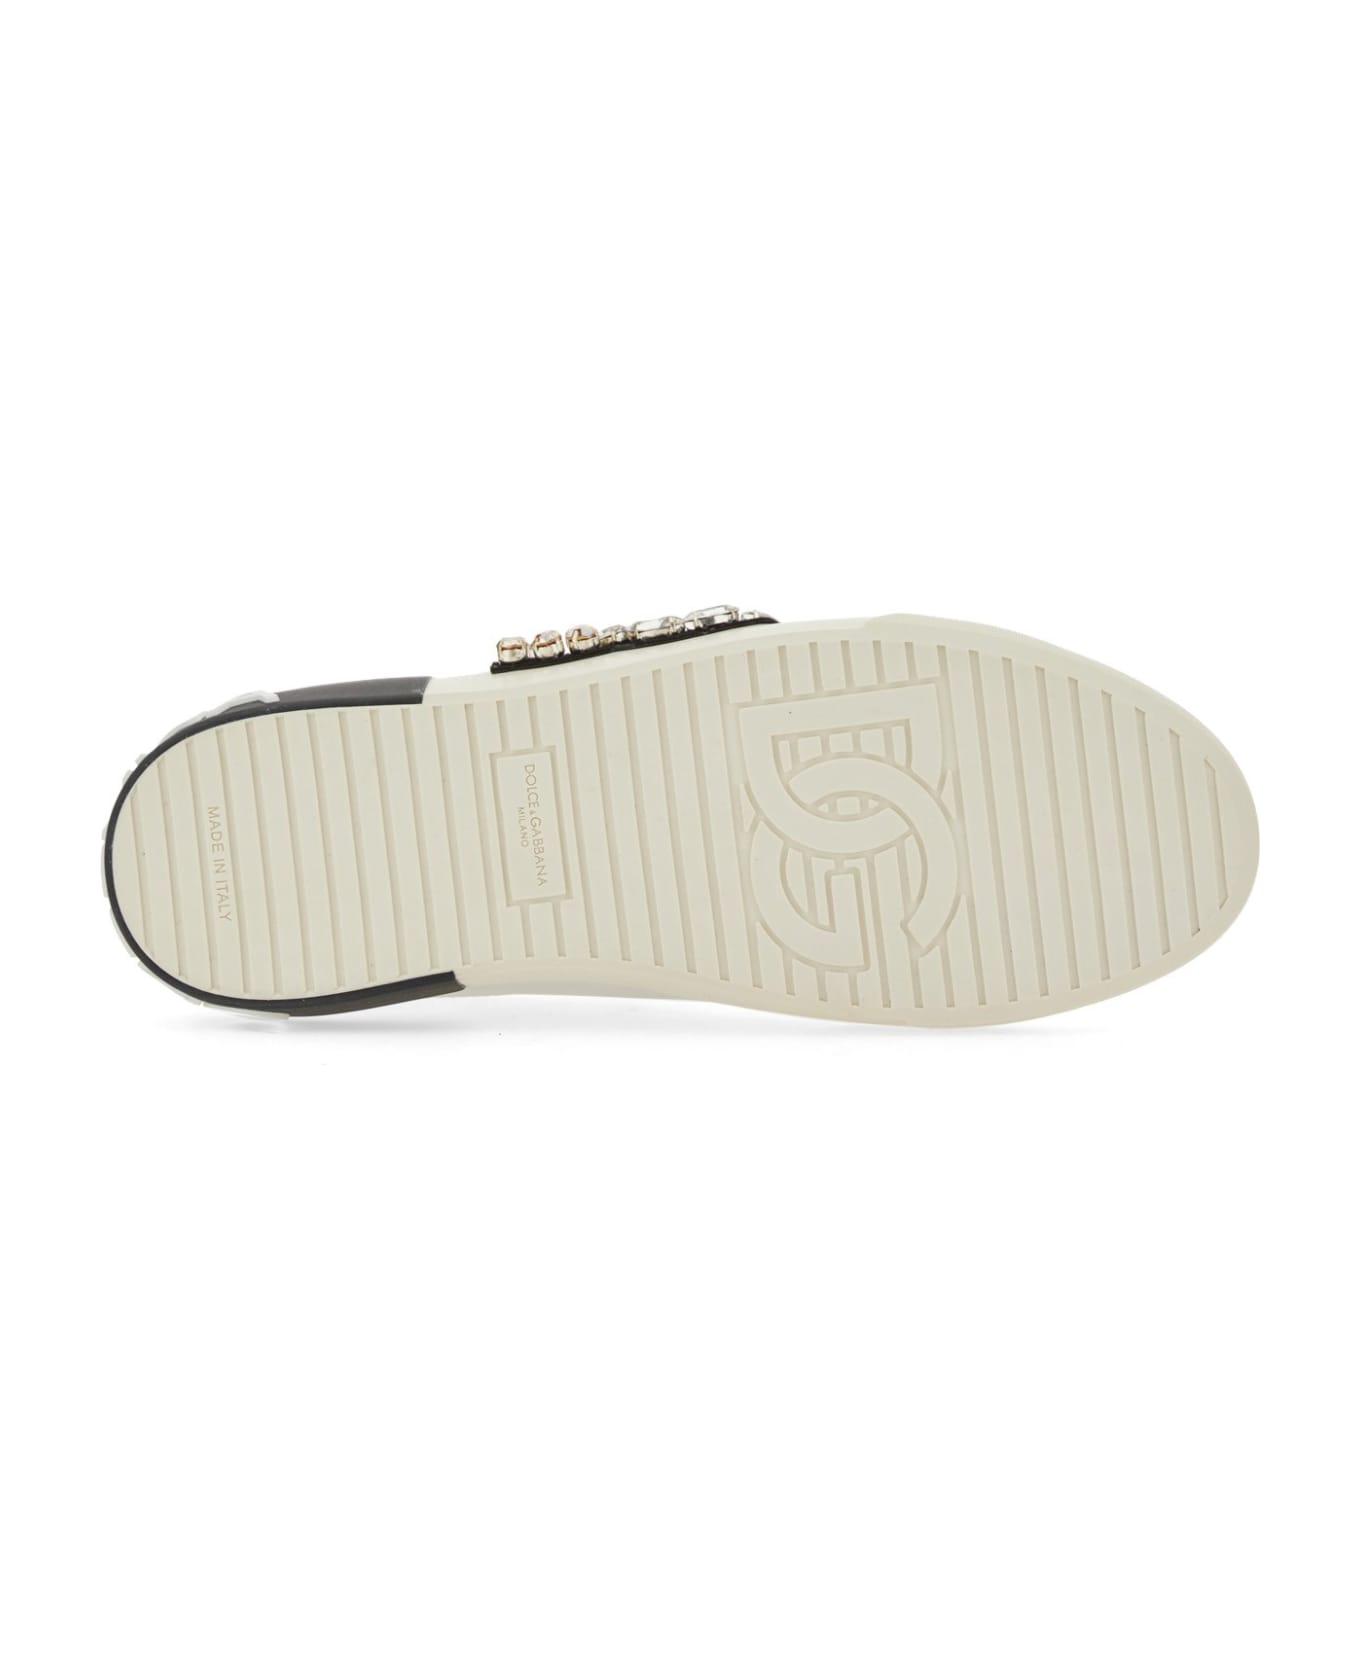 Dolce & Gabbana Portofino Vintage Sneakers - White / Gold